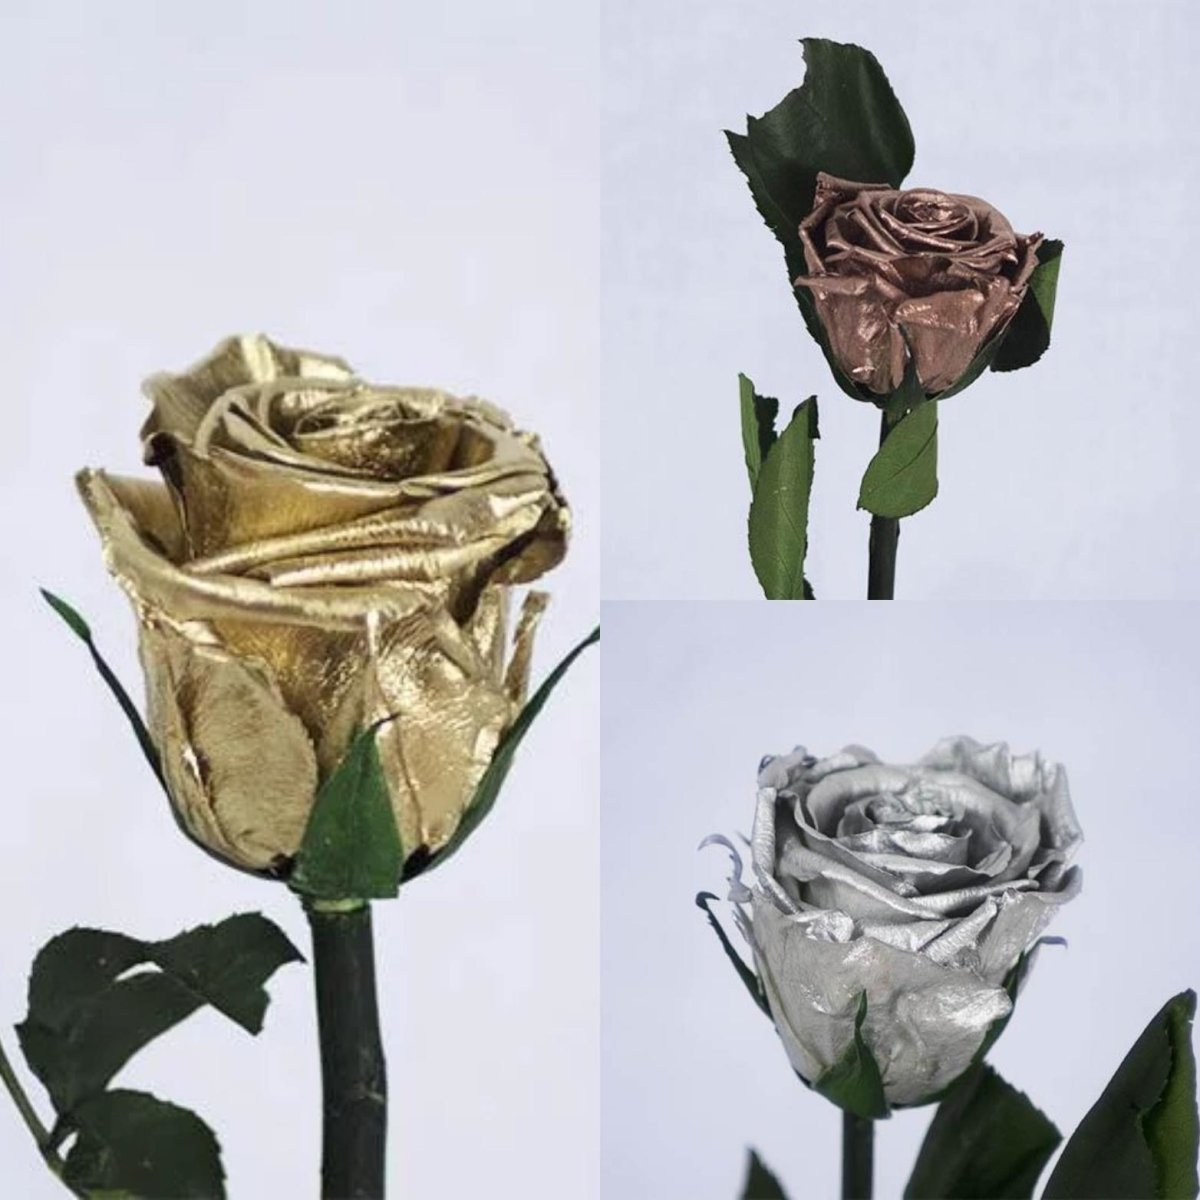 Rosa eterna preservada colores metálizados de Floréate – Floreate